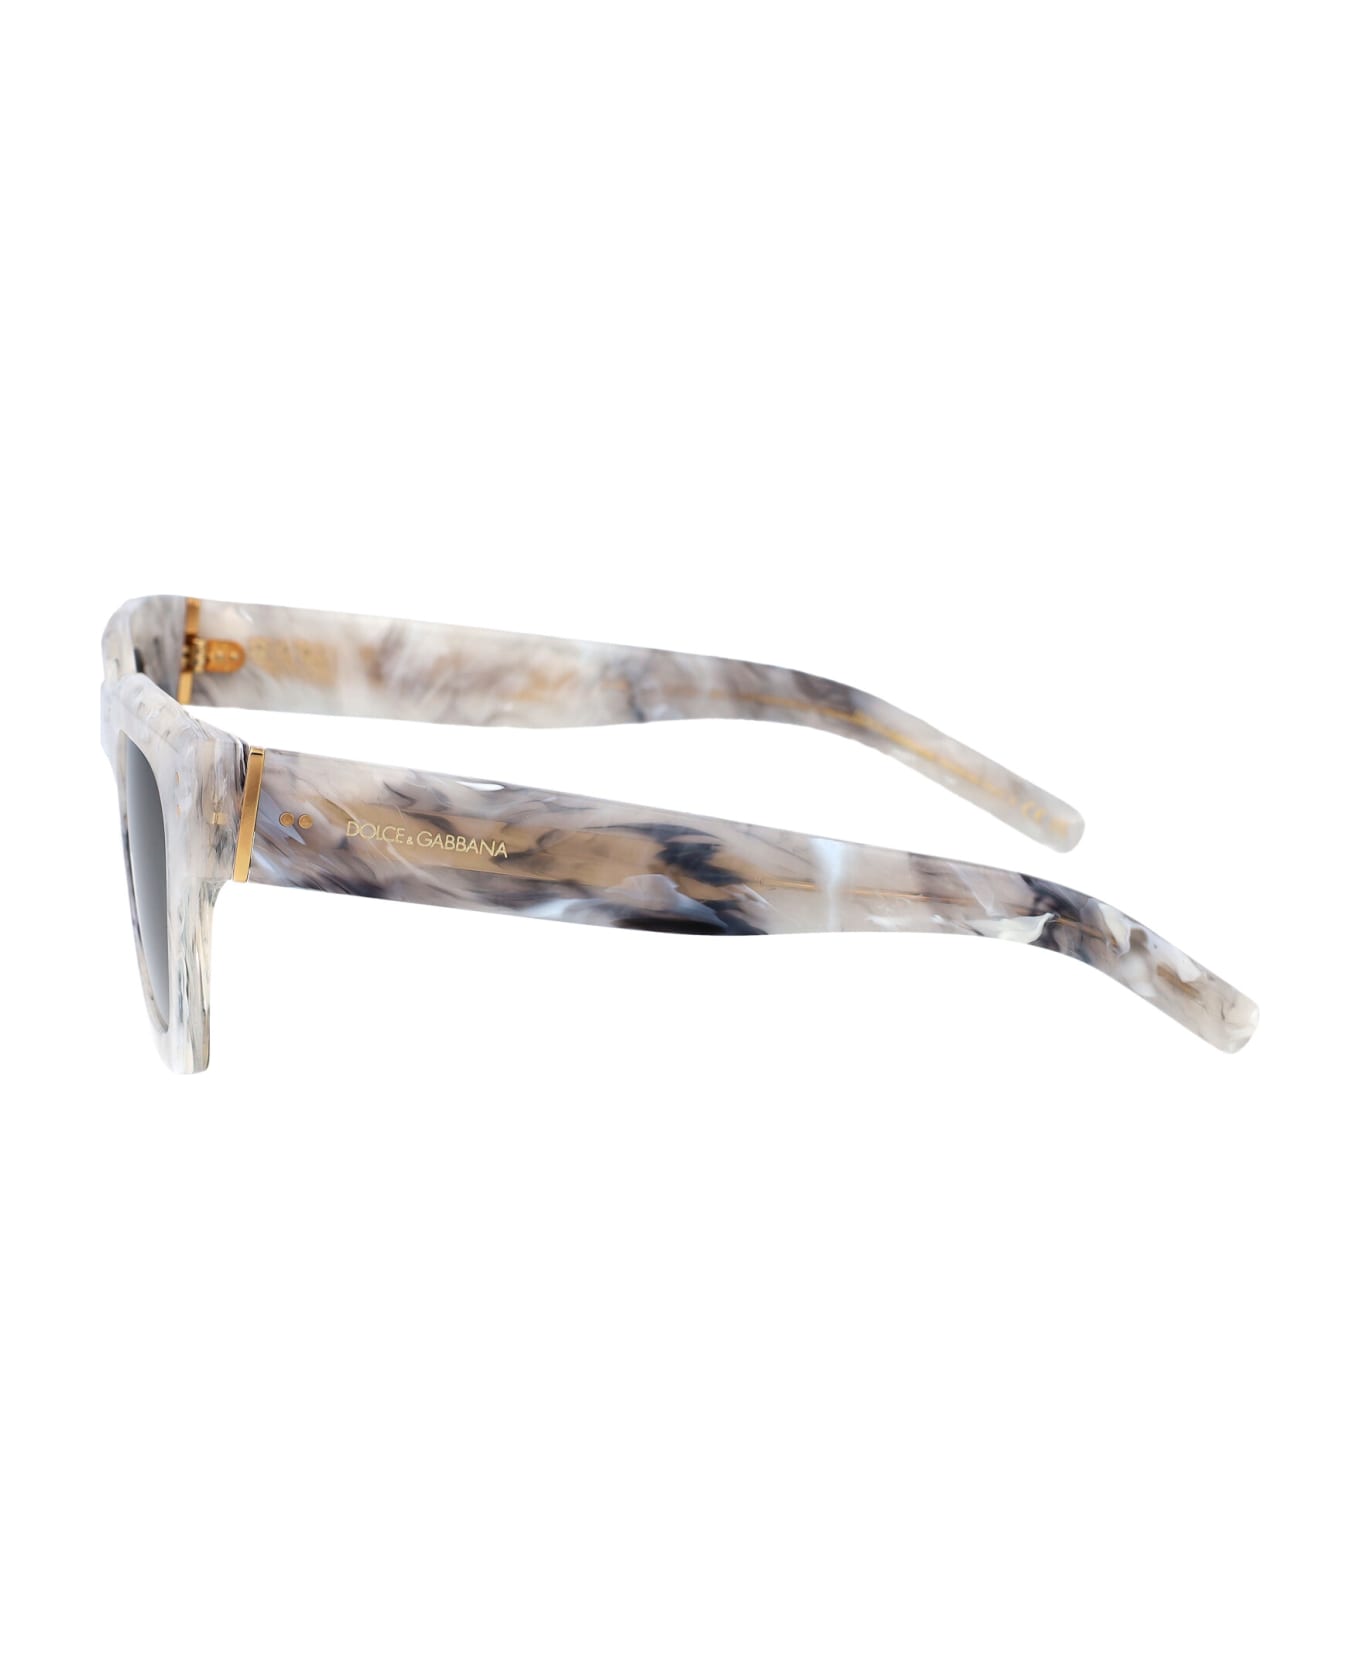 Dolce & Gabbana Eyewear 0dg4413 Sunglasses - 342887 Grey Marble